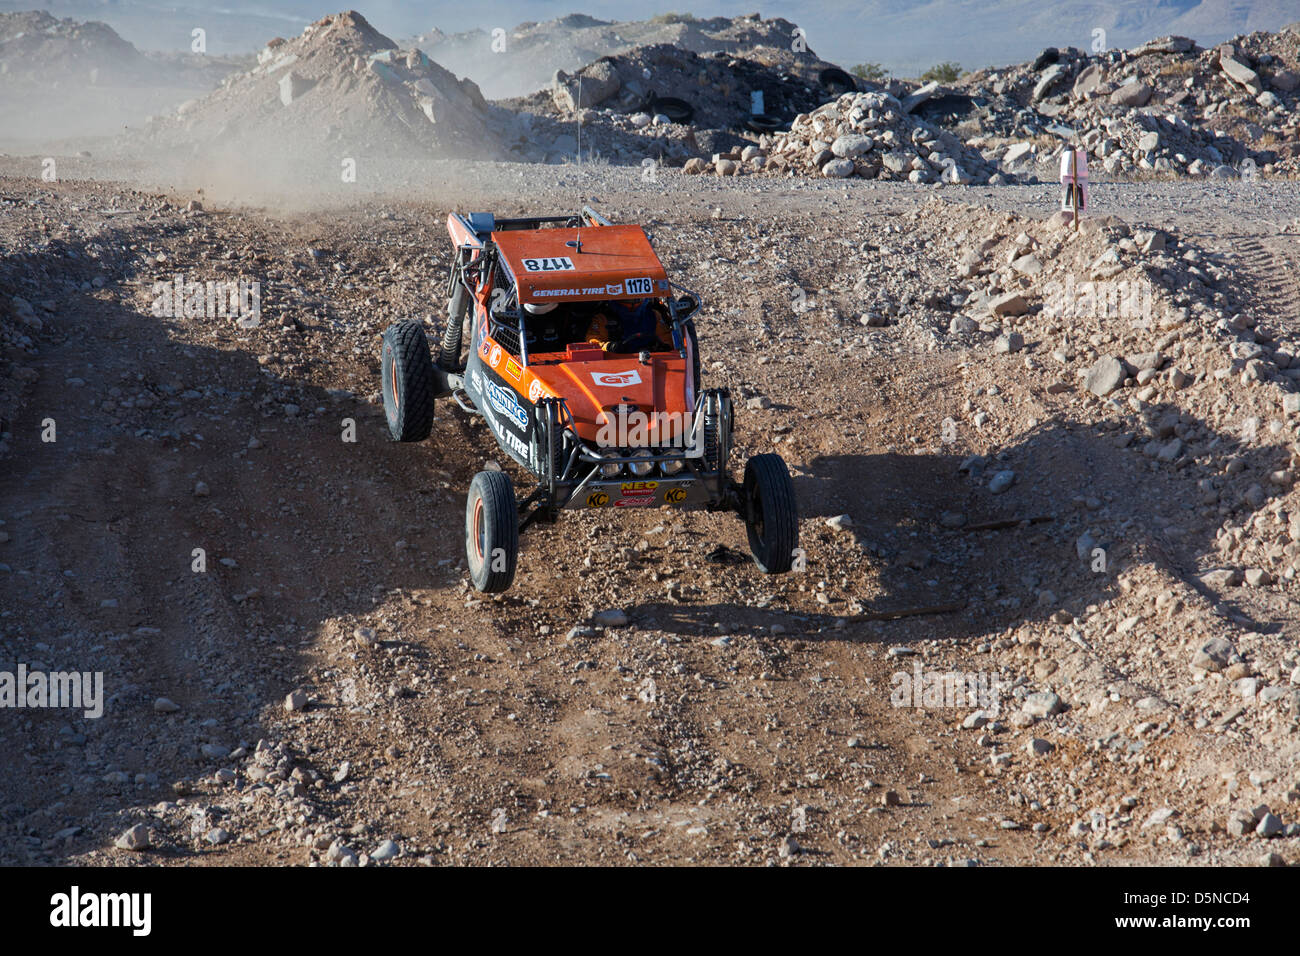 Jean, Nevada - The Mint 400 off-road auto race through the Mojave Desert near Las Vegas. Stock Photo